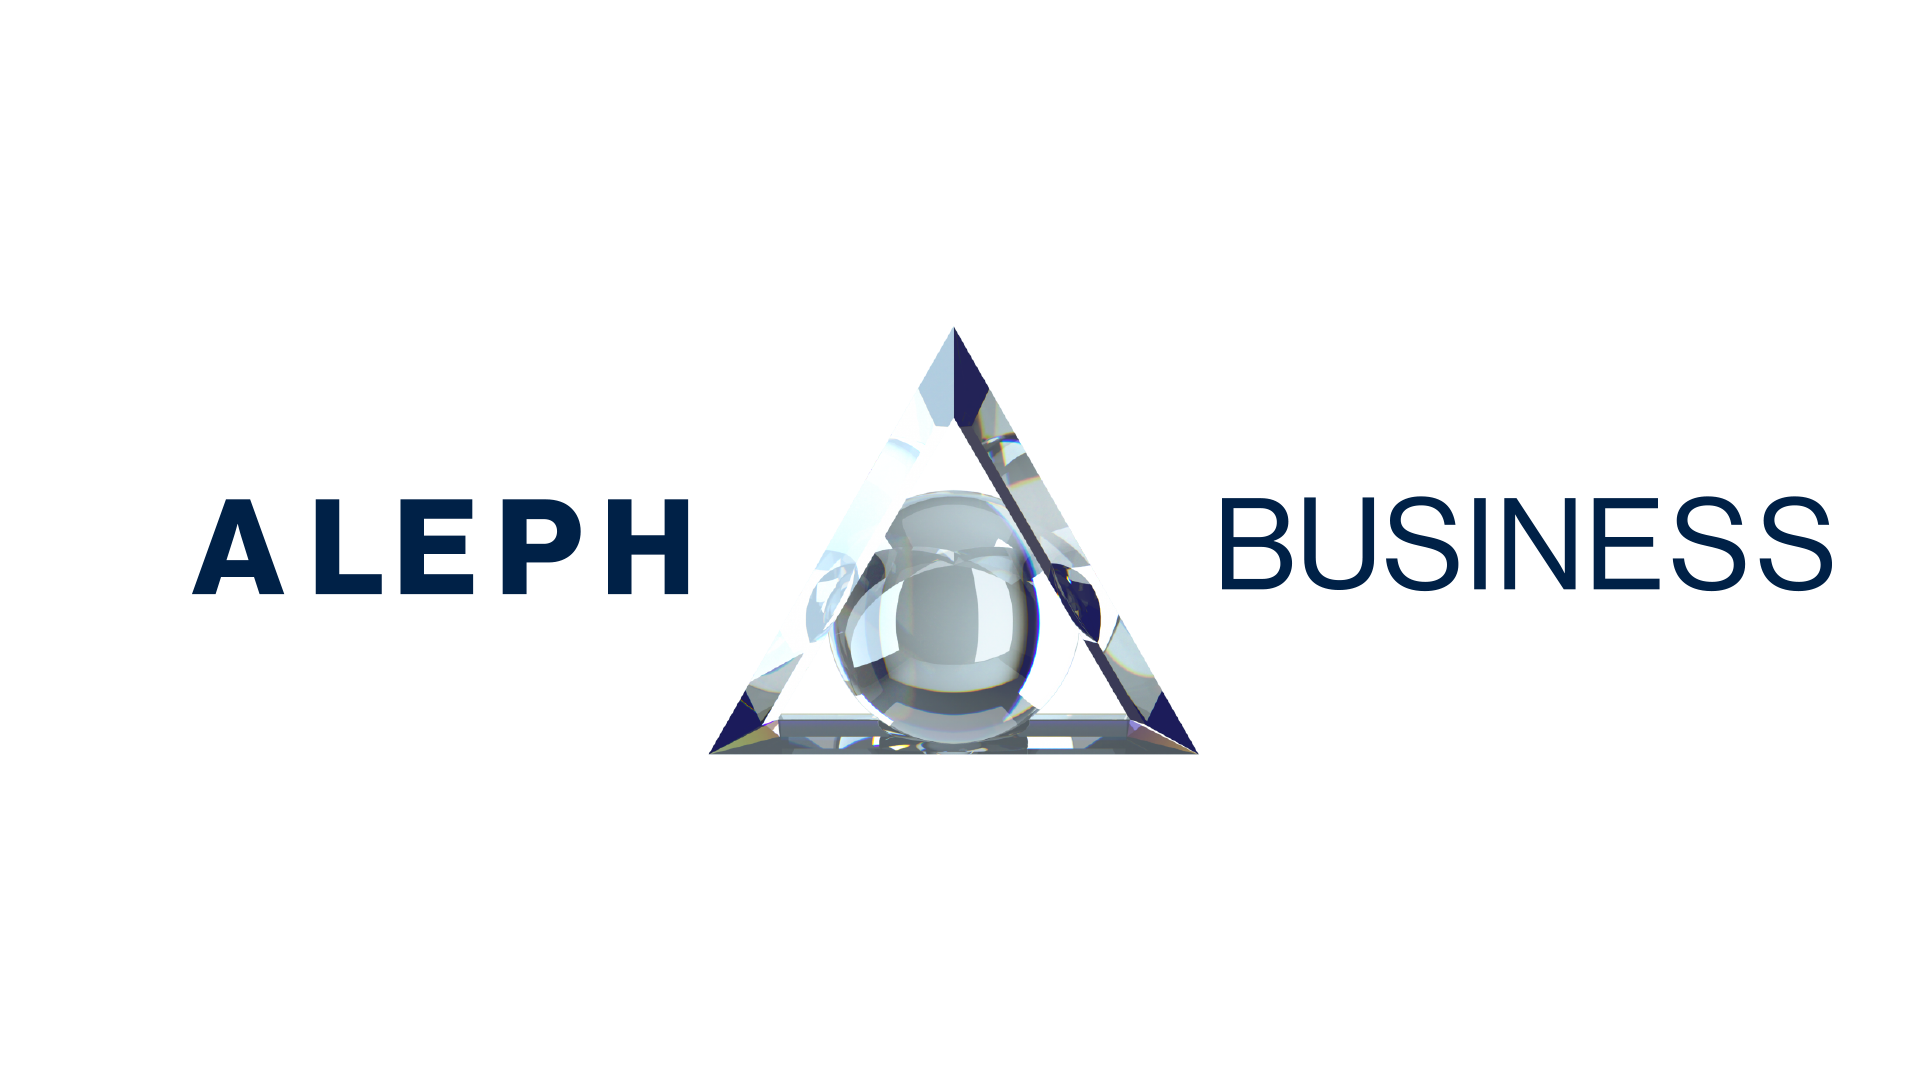 ALEPH BUSINESS